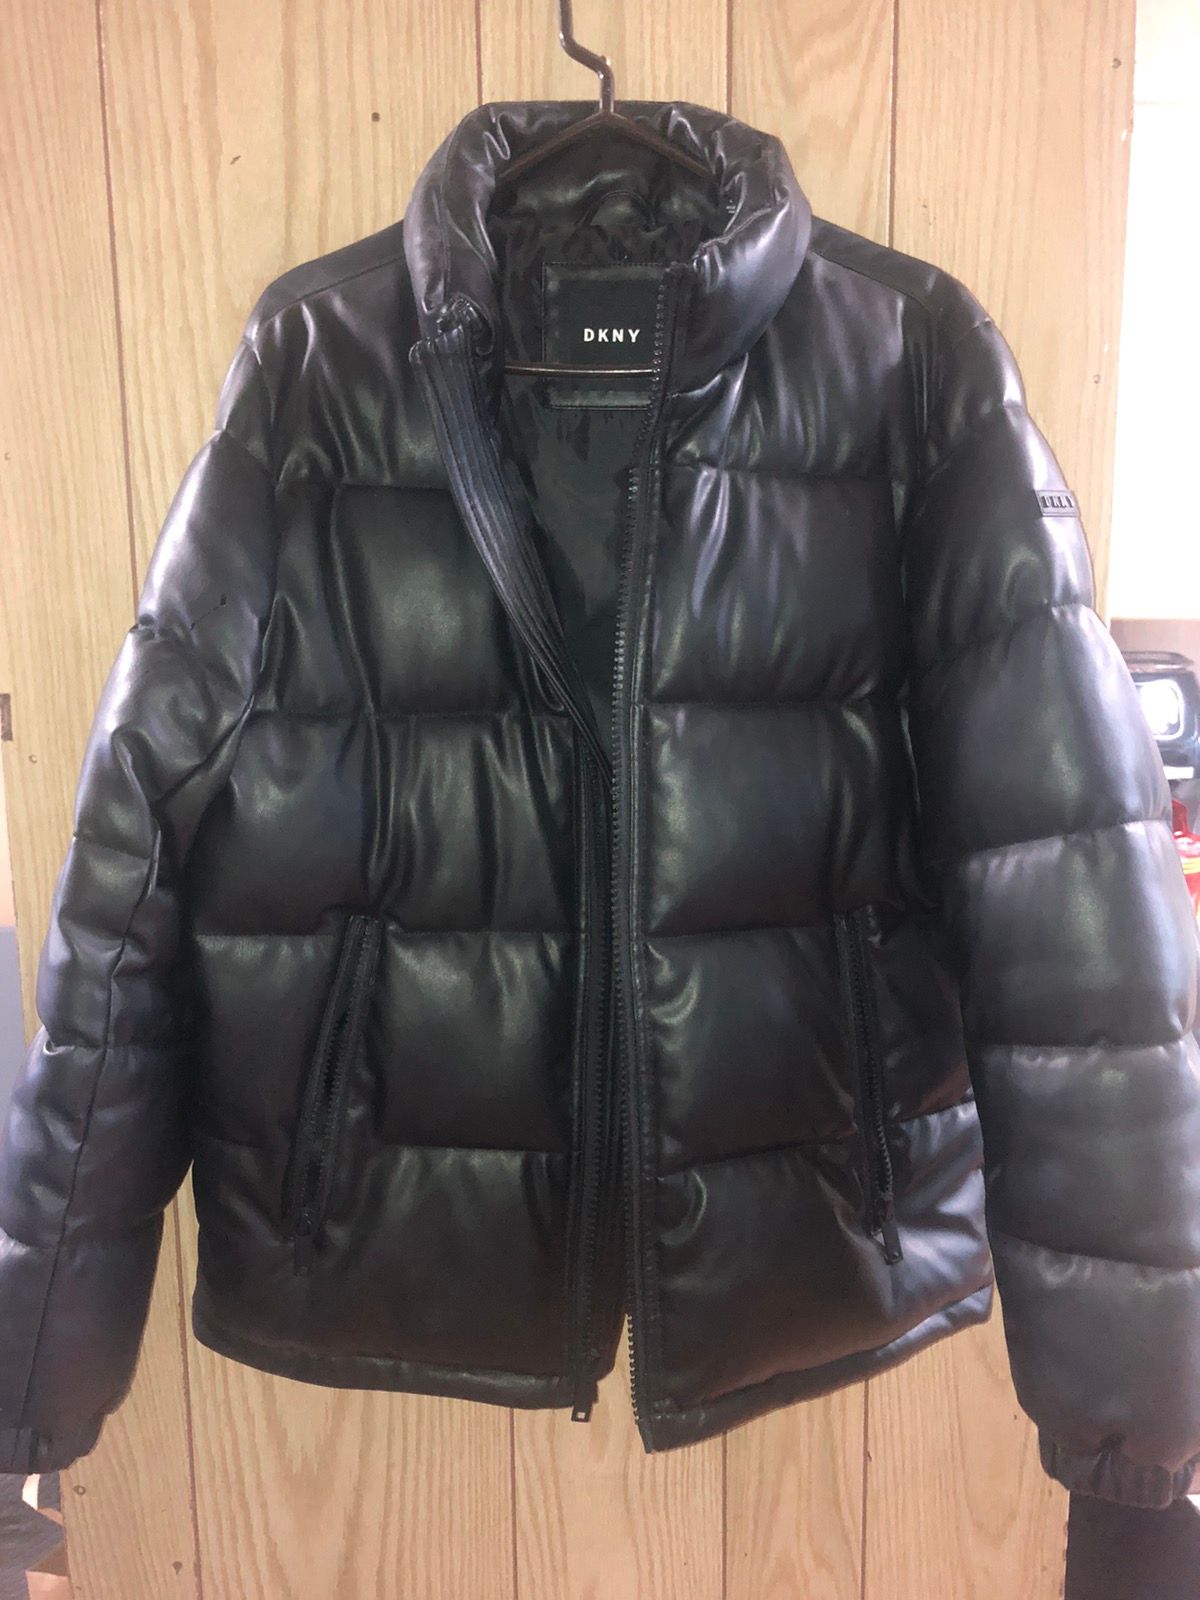 DKNY BKNY Black puffer jacket Size US S / EU 44-46 / 1 - 1 Preview